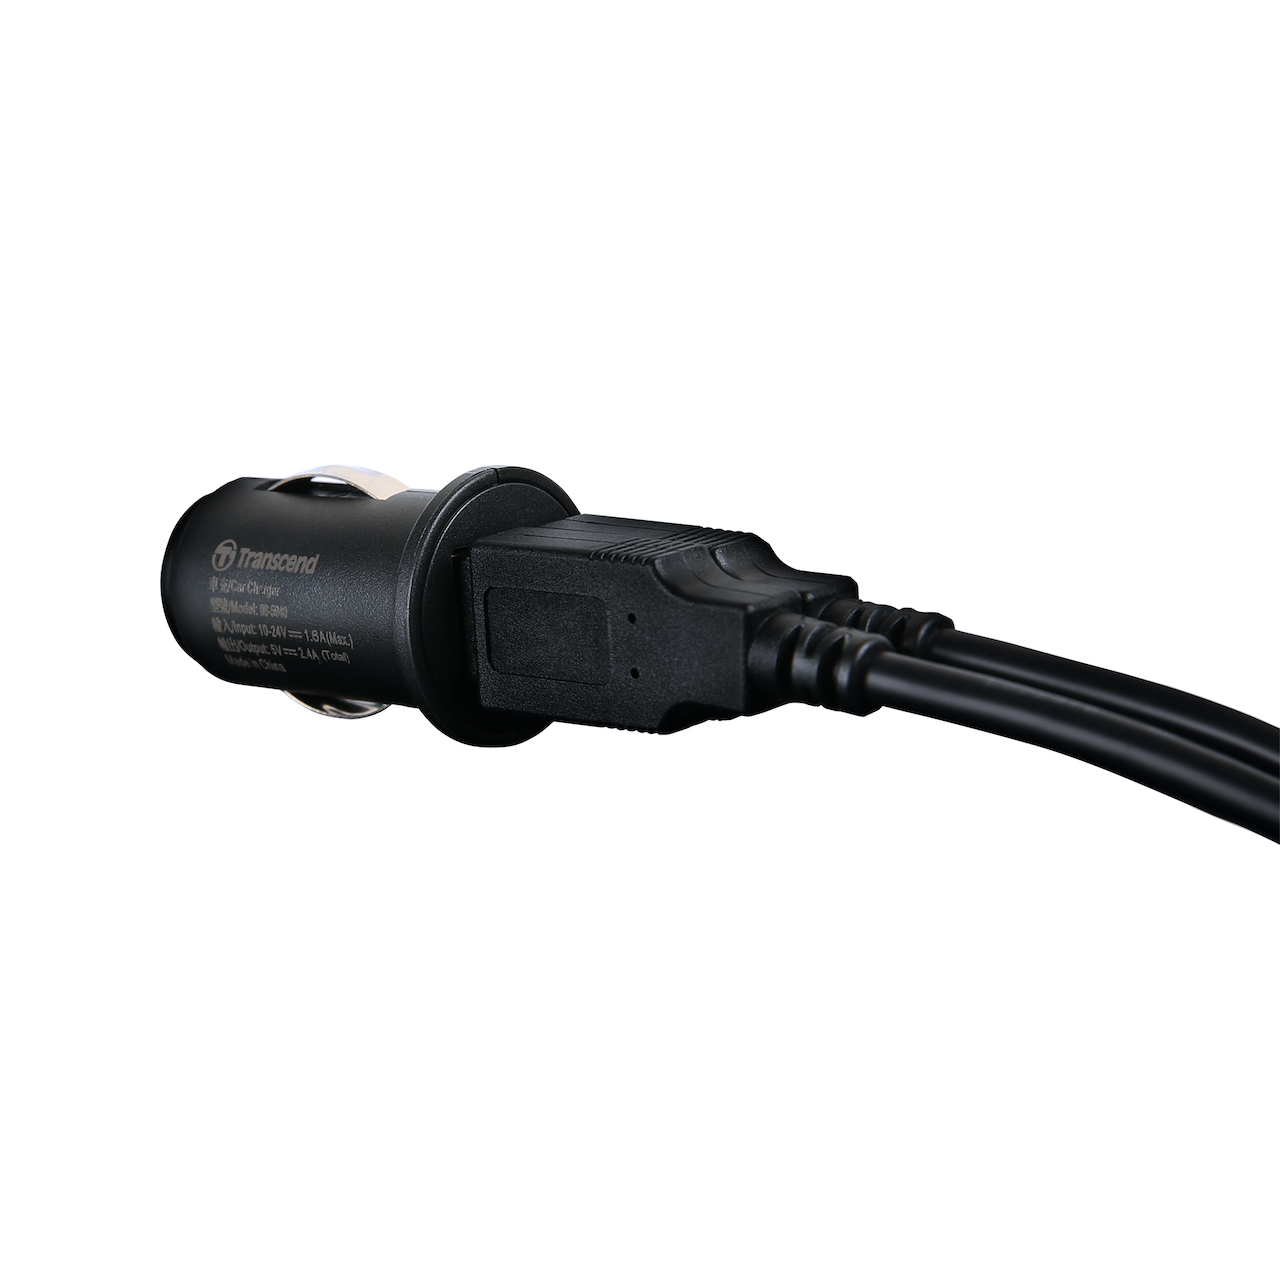 Car Lighter Adapter (TS-DPL2)  Accessories - Transcend Information, Inc.